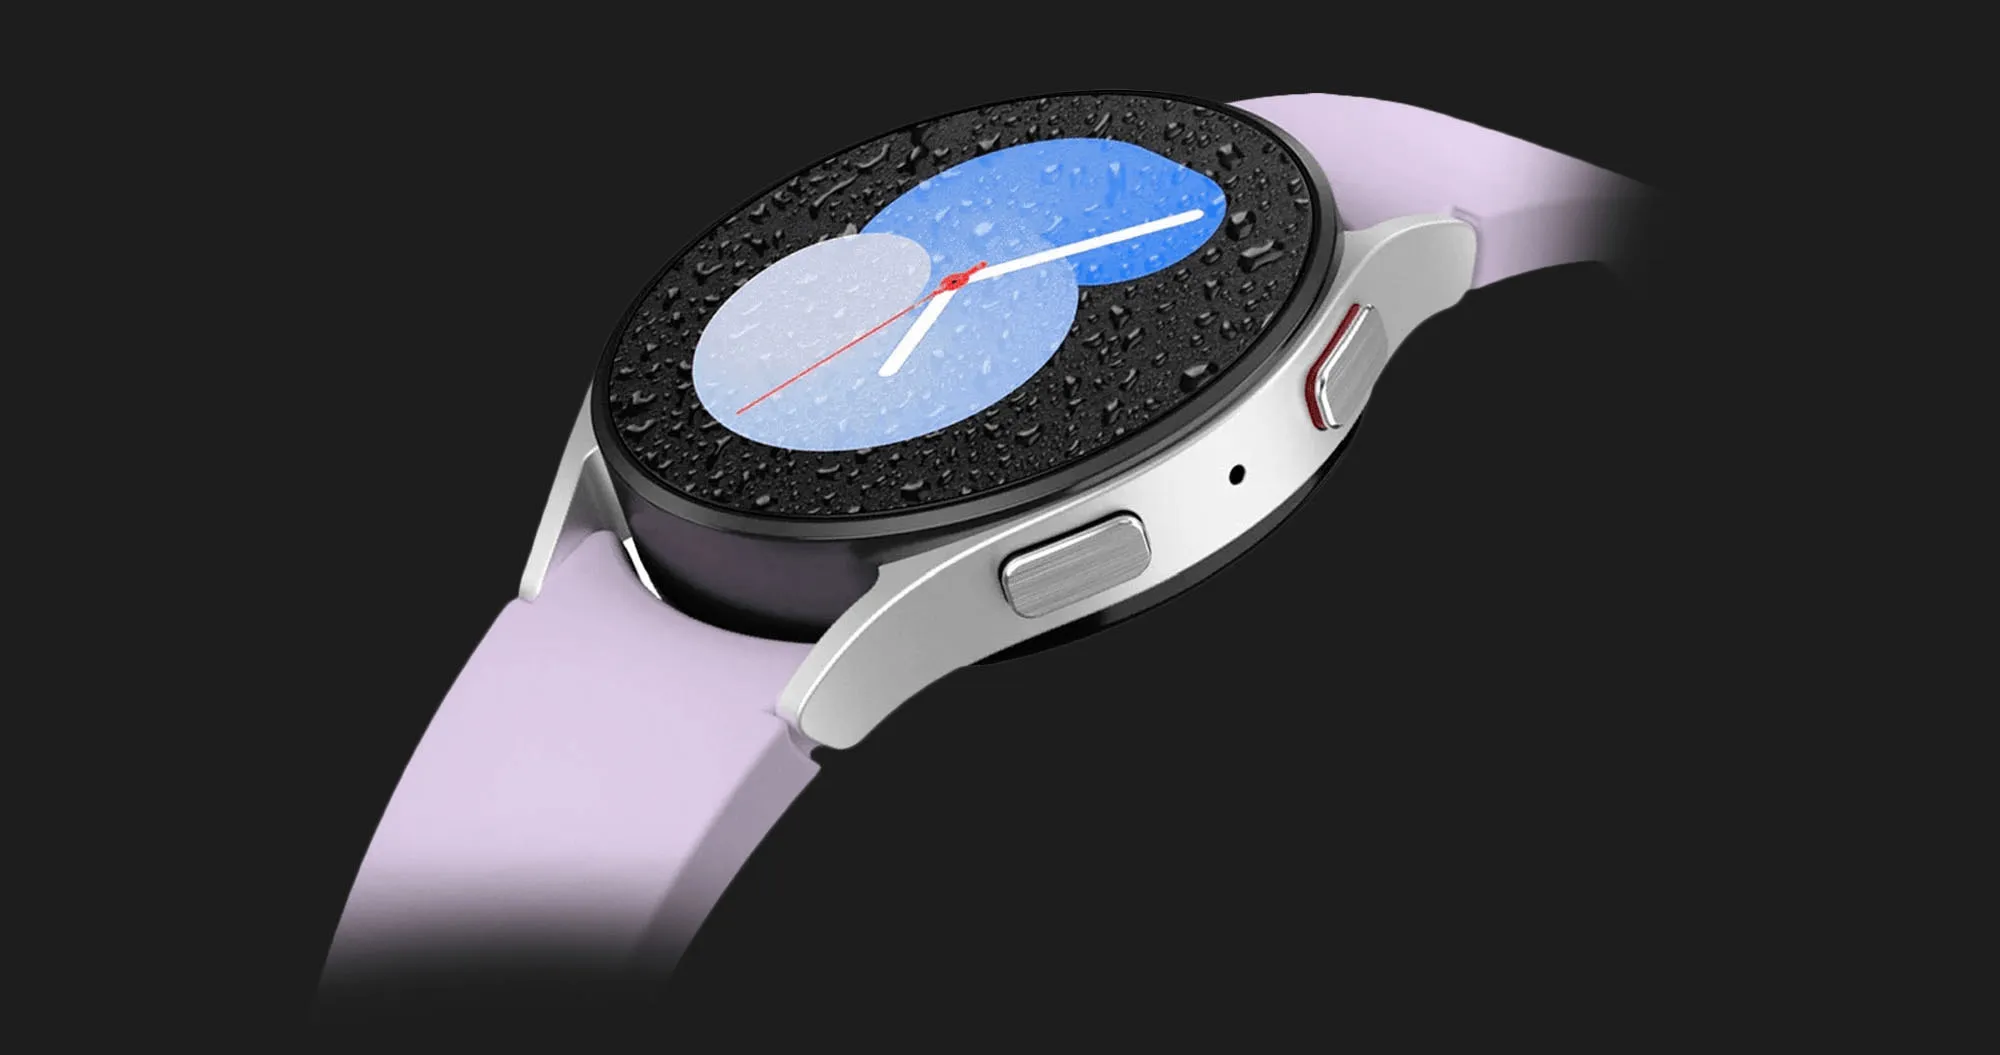 Смарт-годинник Samsung Galaxy Watch 5 44mm (Graphite)